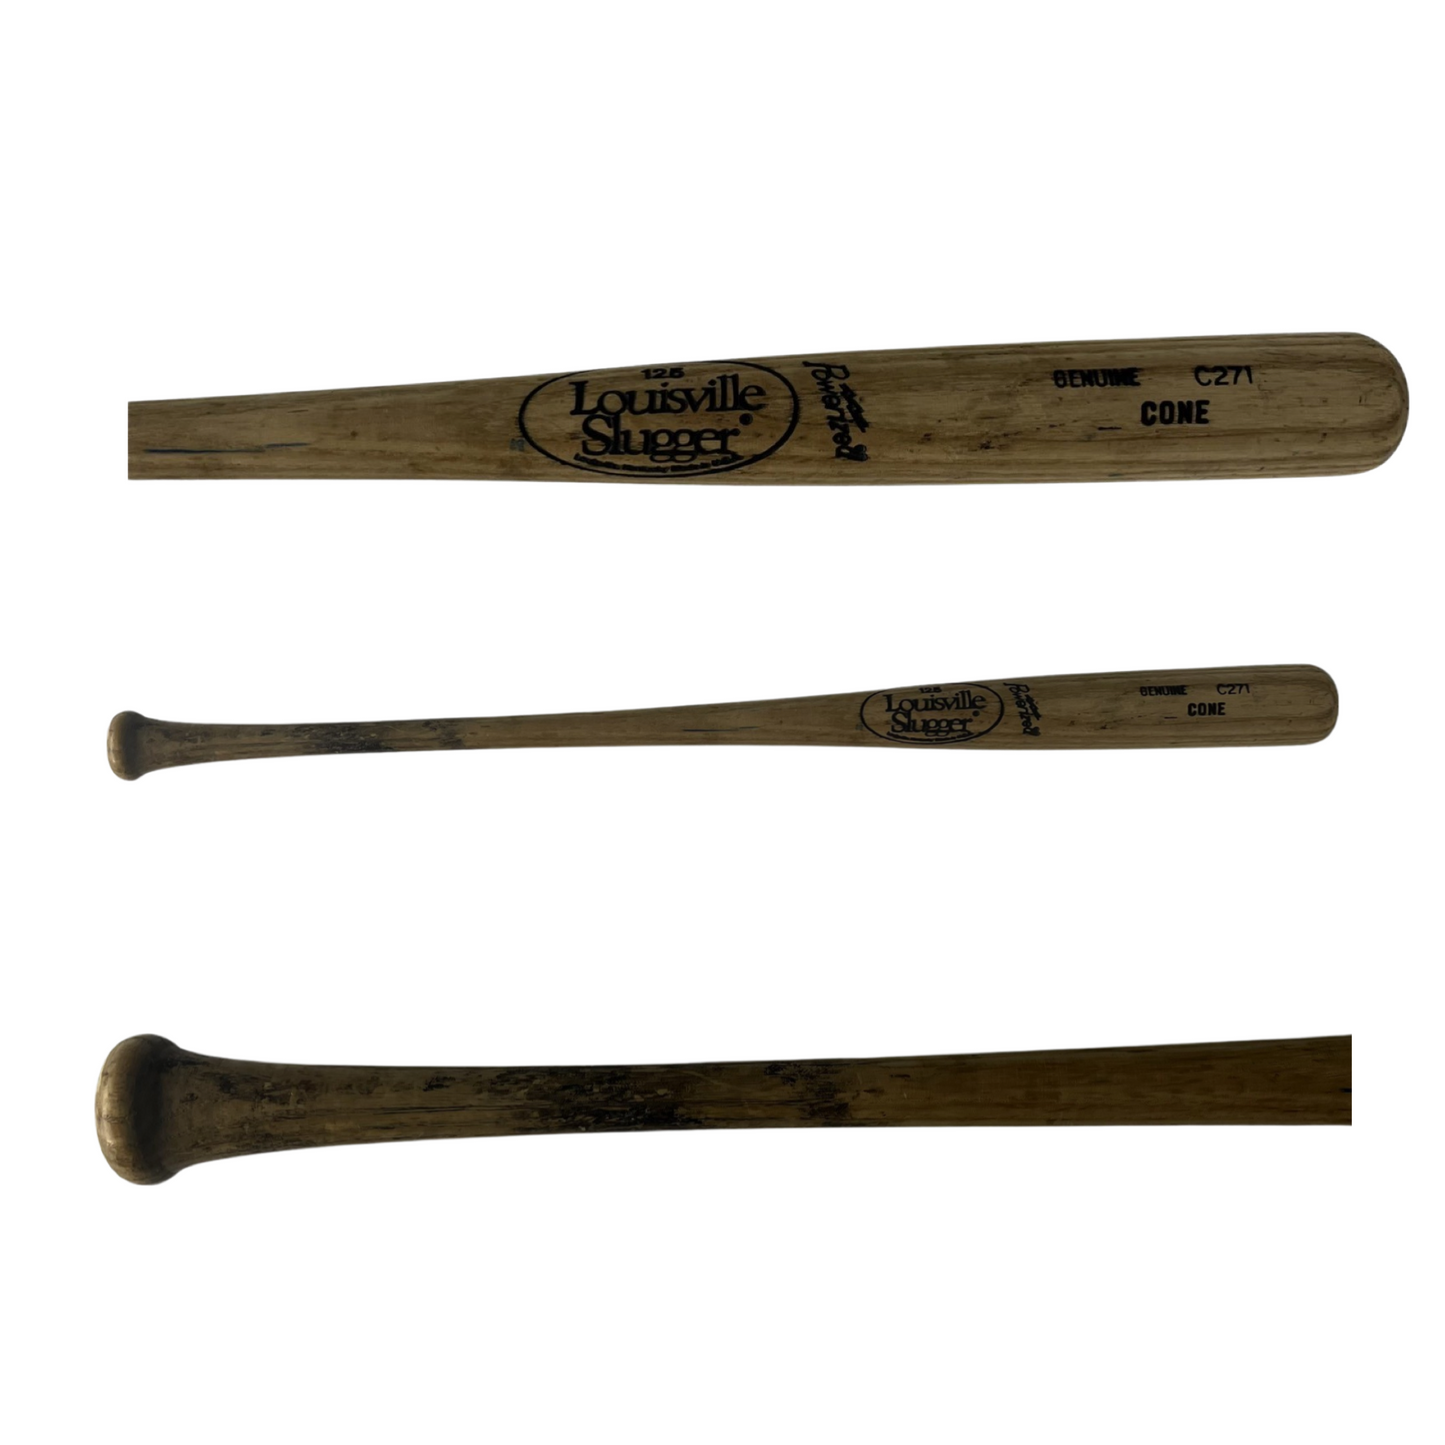 David Cone Unsigned Game Used Tan Louisville Slugger Bat